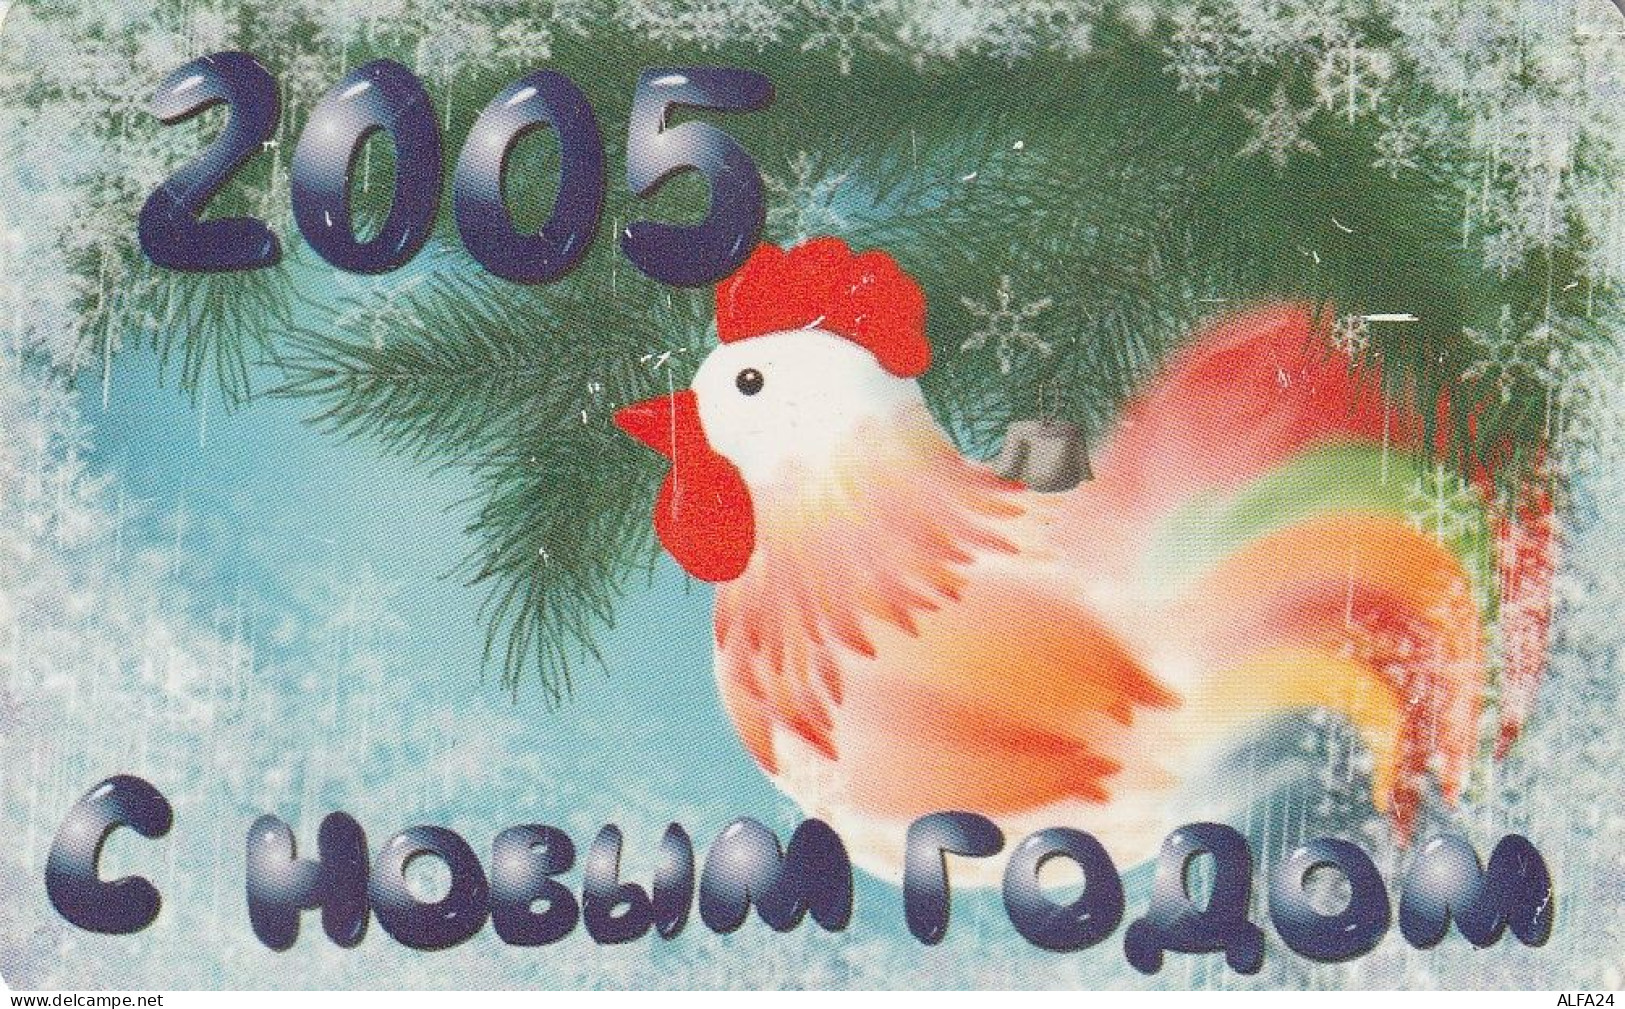 PHONE CARD RUSSIA Bashinformsvyaz - Ufa (E10.2.2 - Rusia